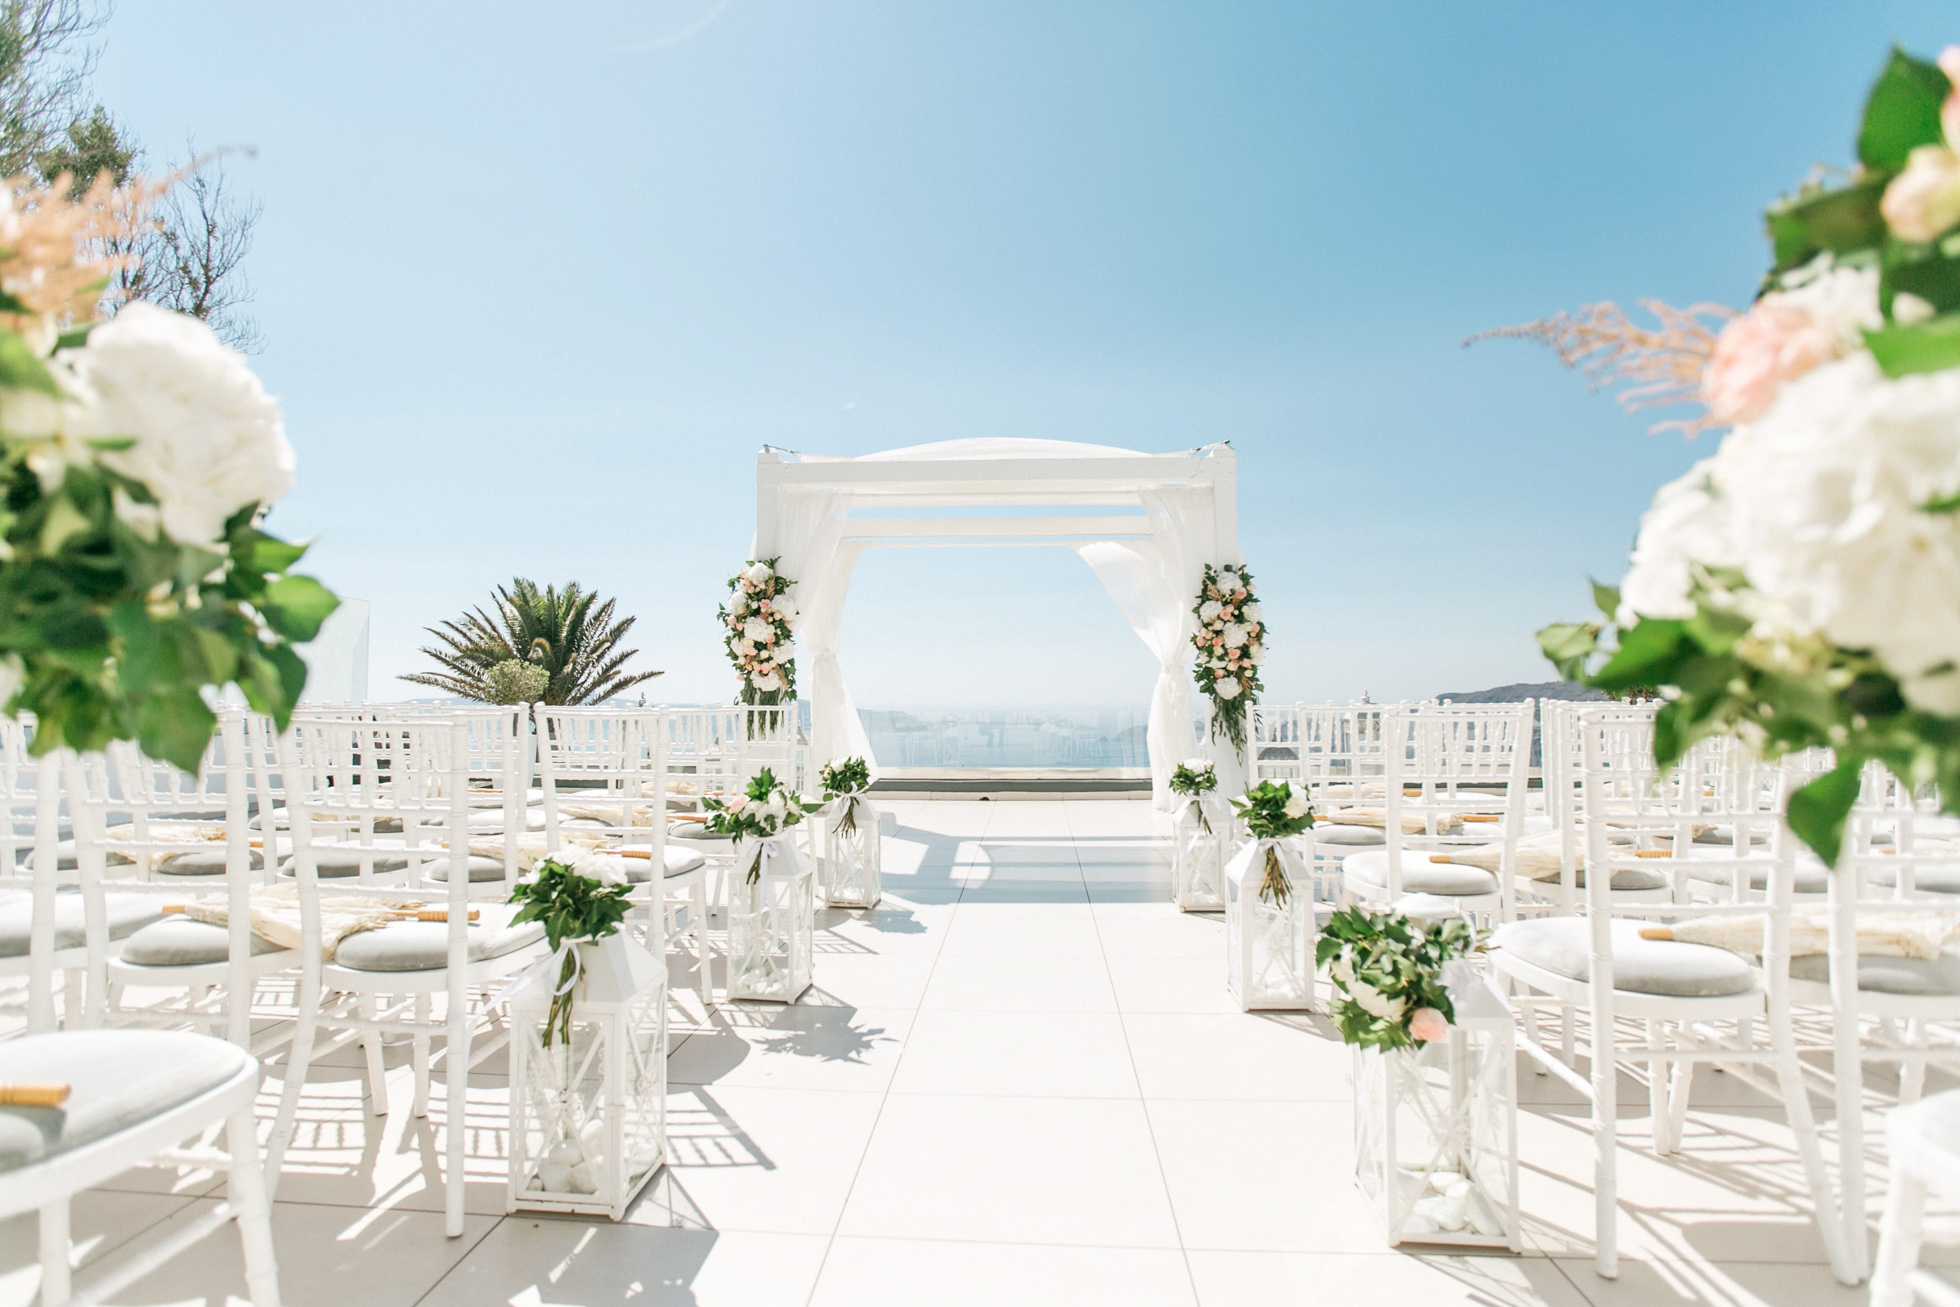 Wedding ceremony decoration and setup for luxury white wedding in Santorini island, Greece.